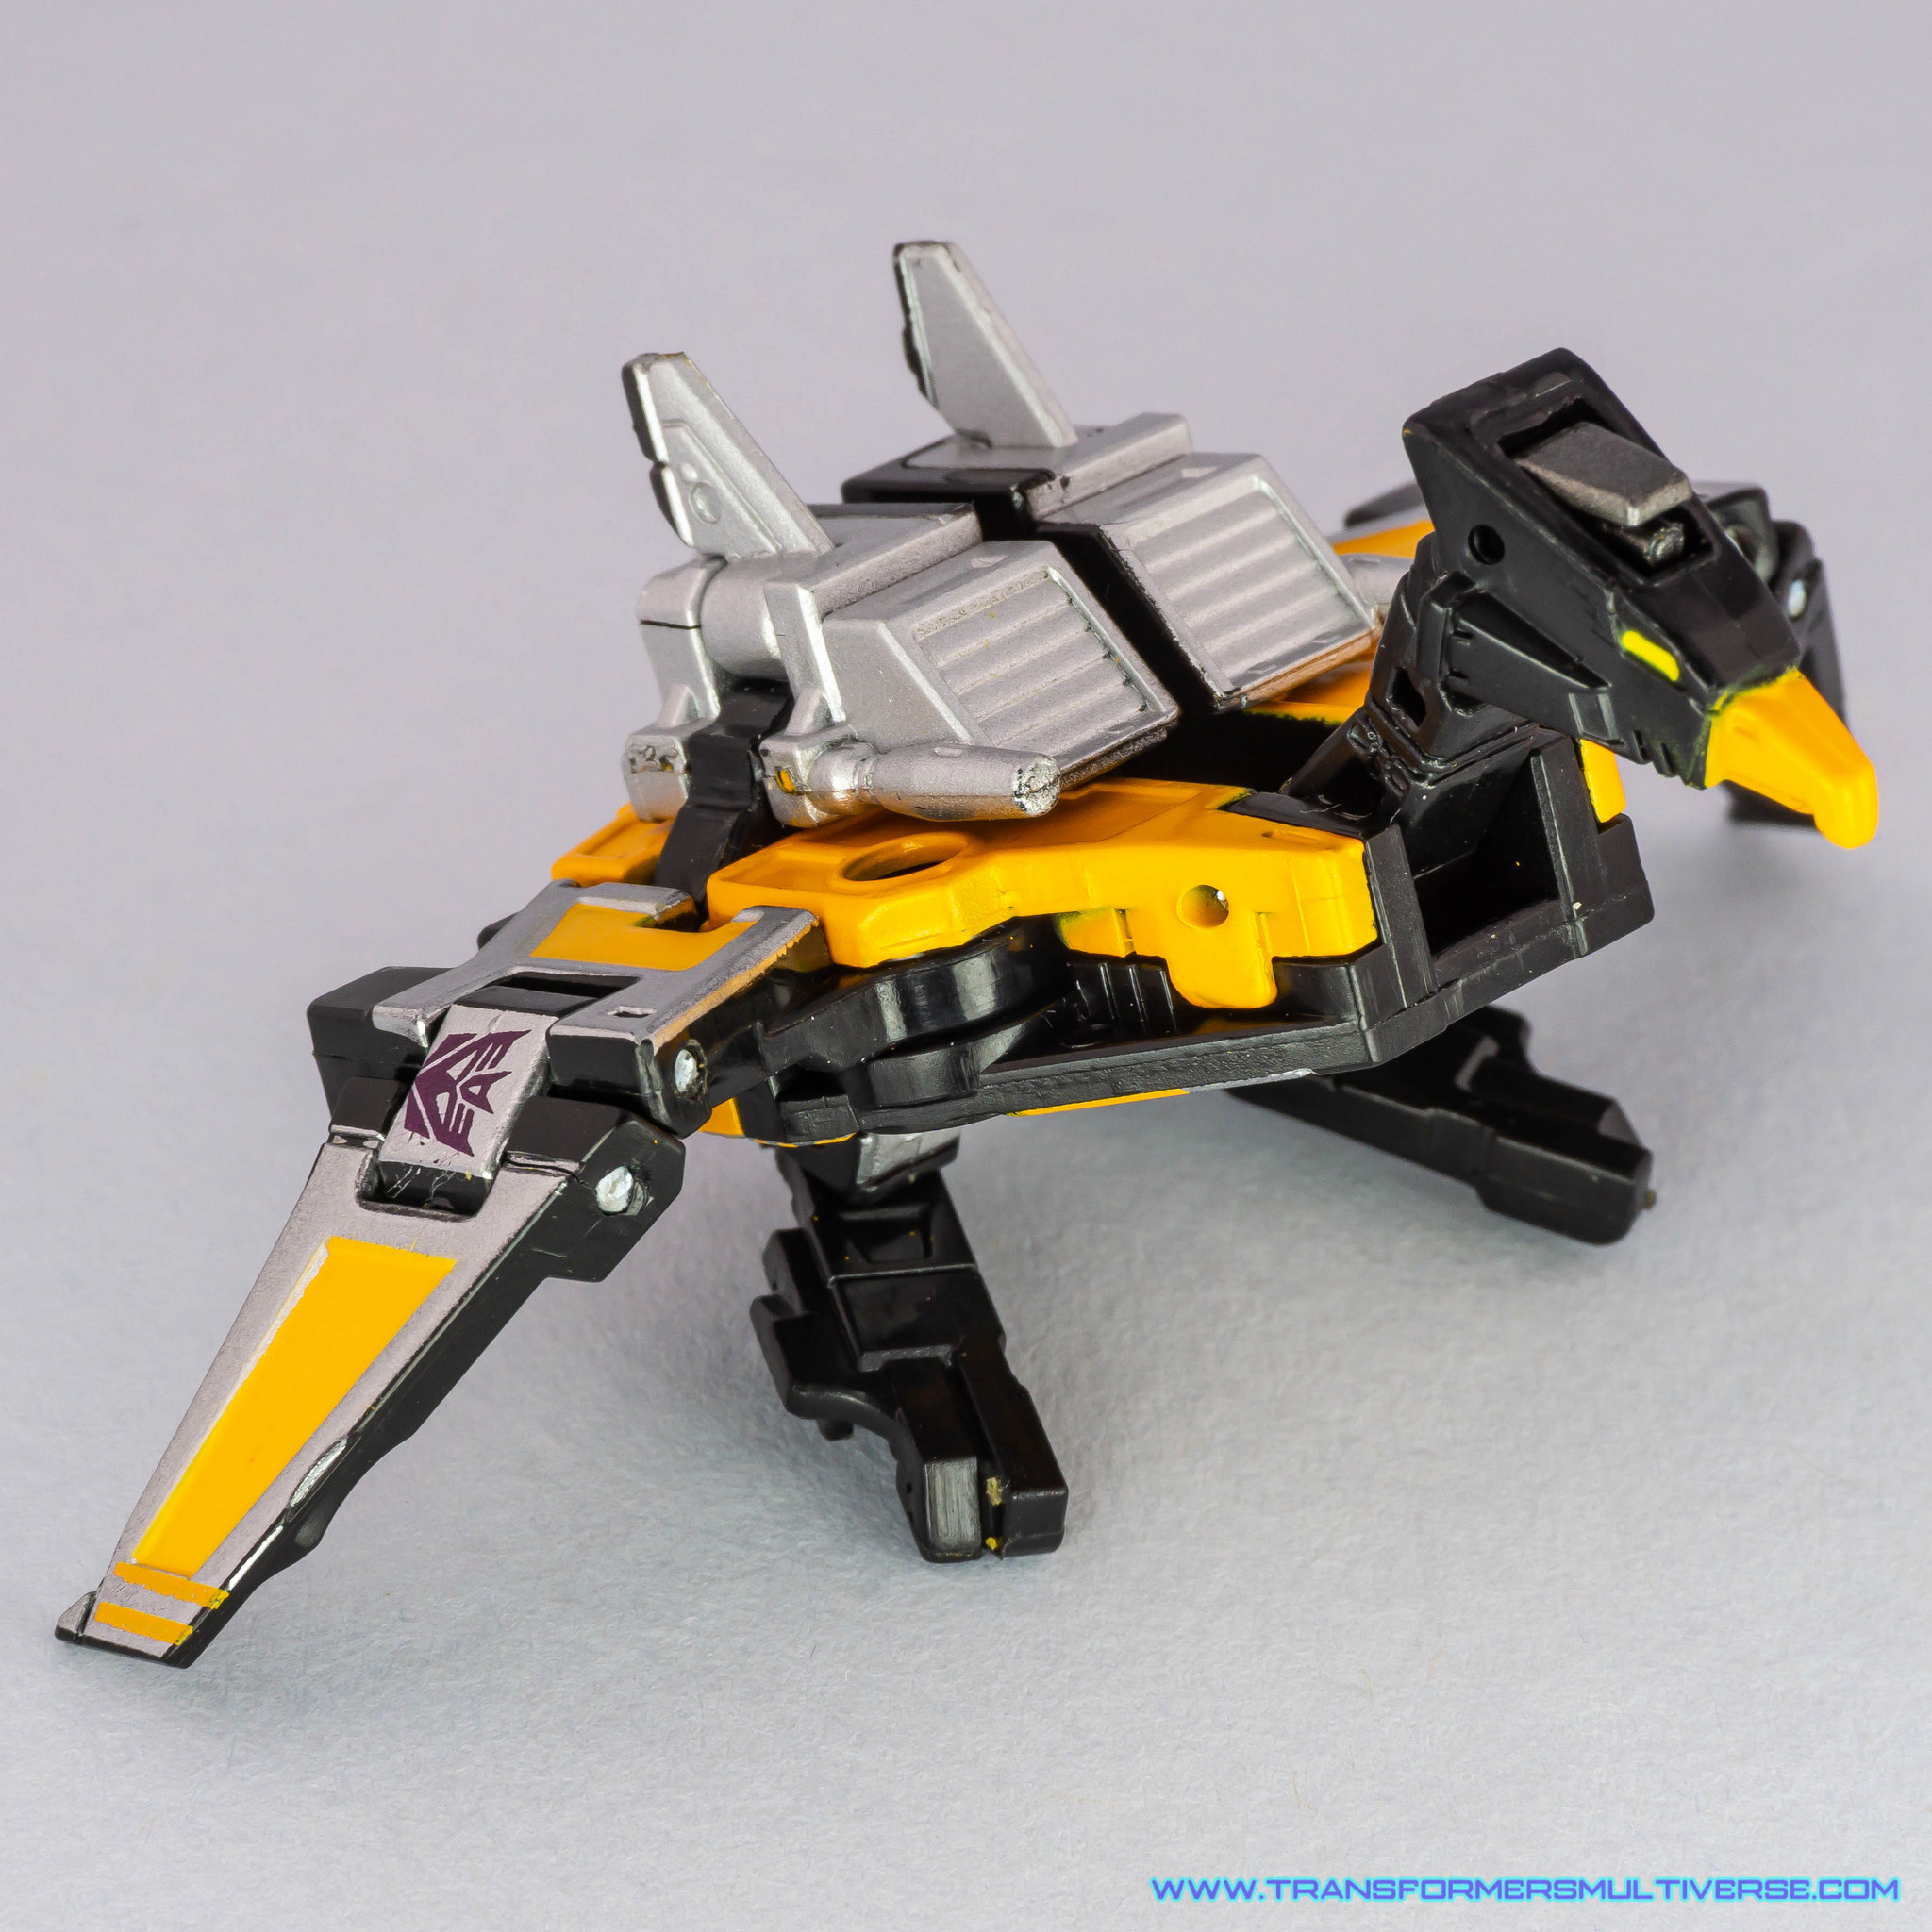 Transformers Masterpiece Buzzsaw Condor with camera deployed